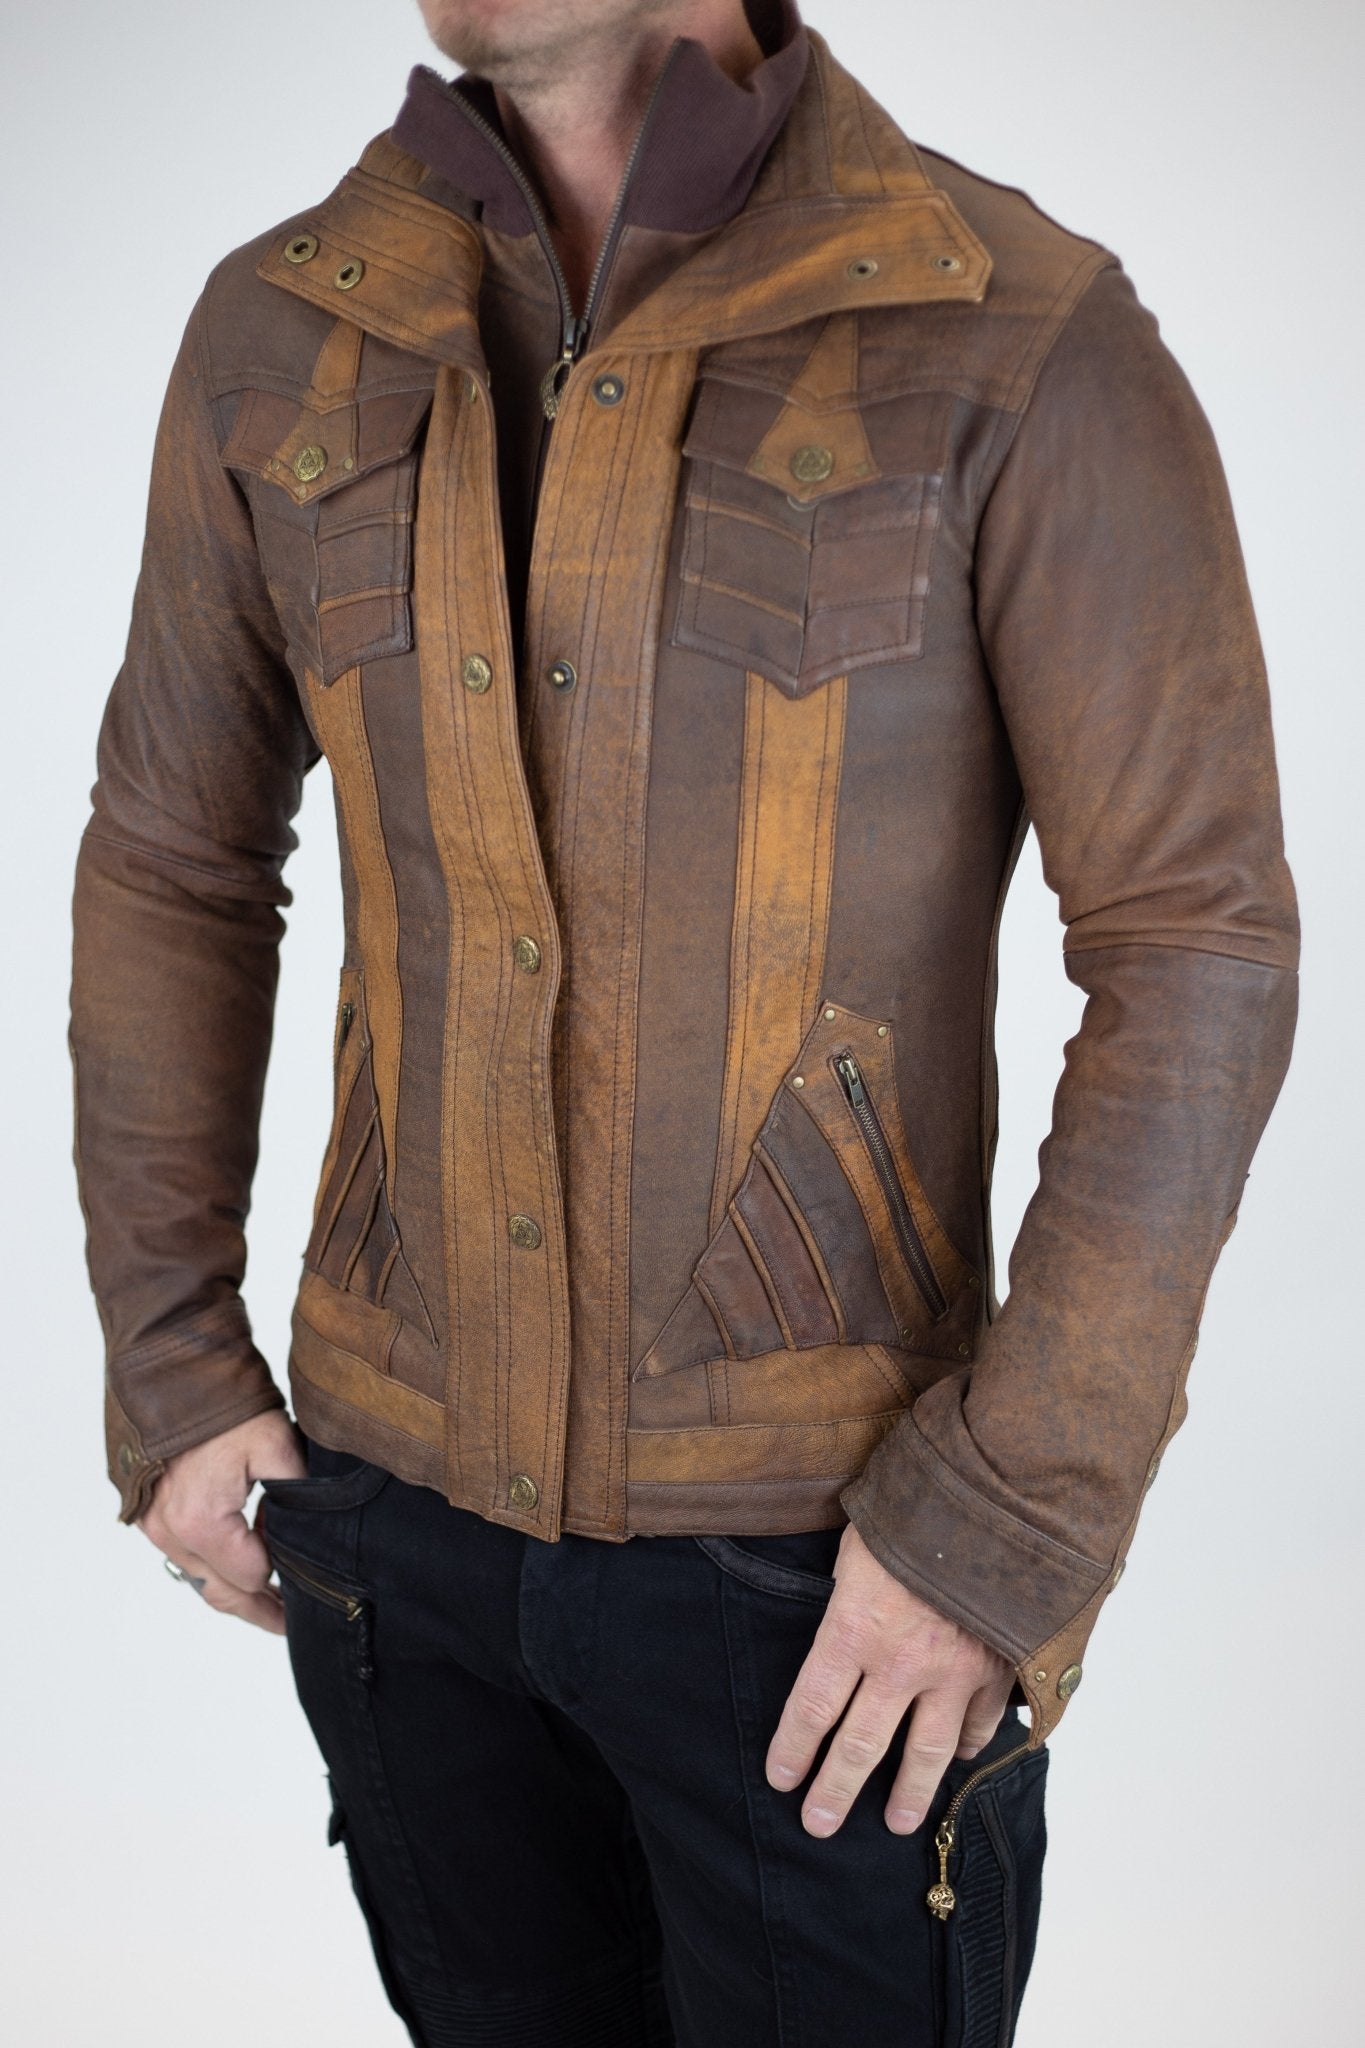 Anahata Designs Alloy Leather Jacket : Delicious Boutique